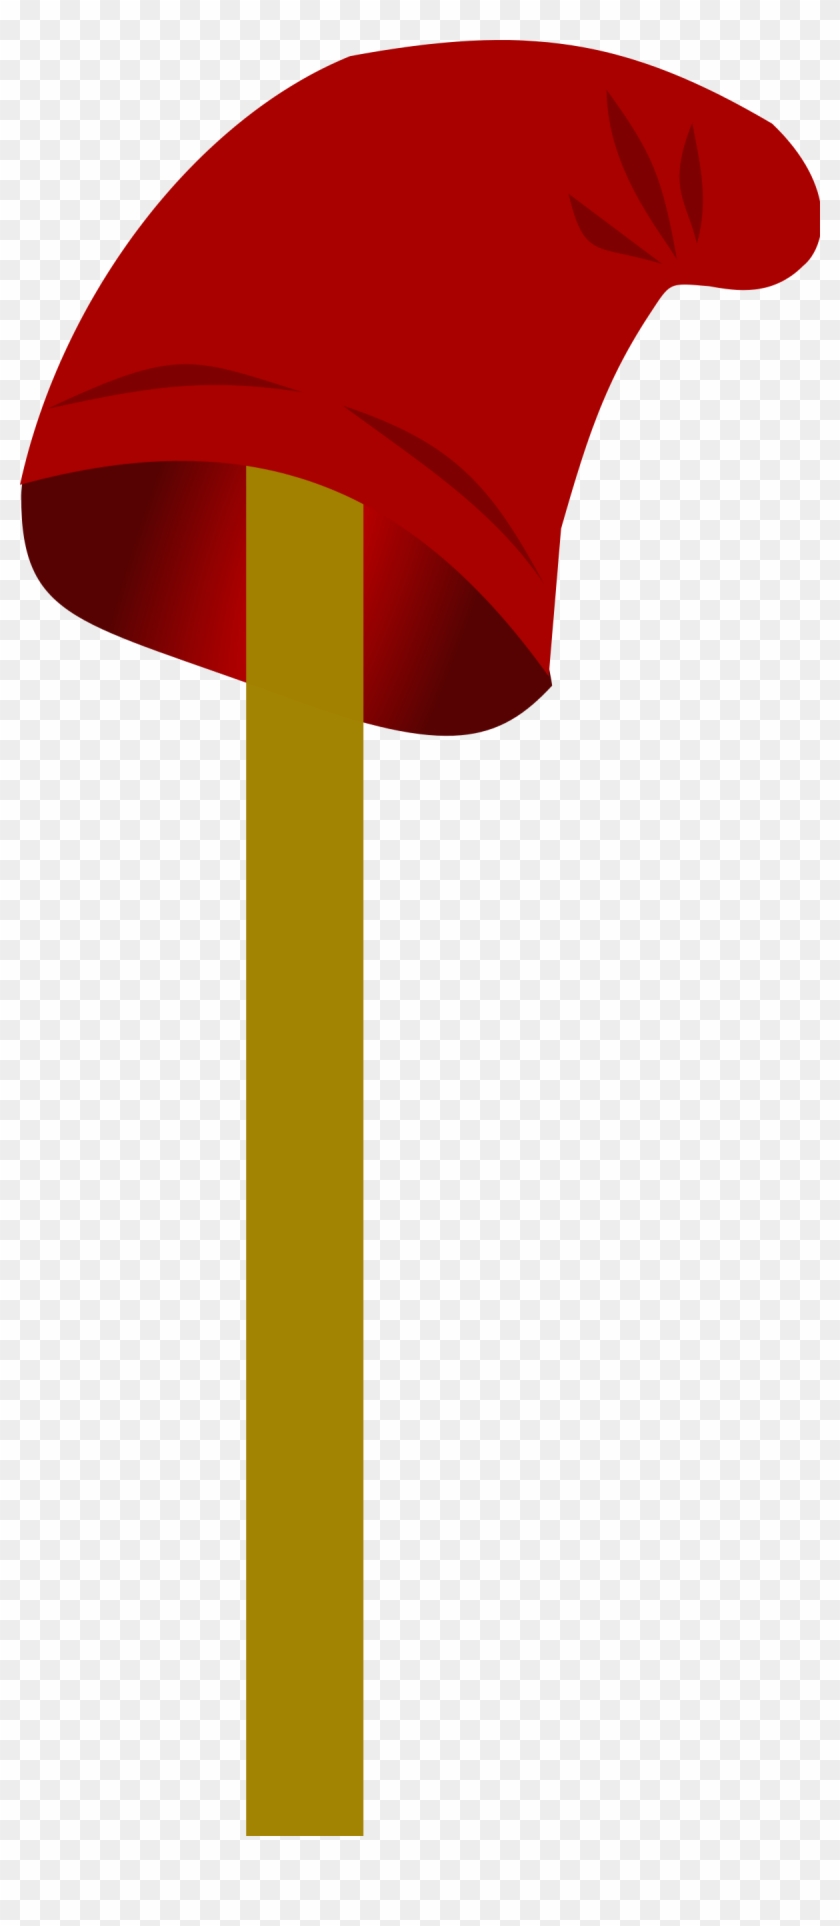 Liberty Pole - Phrygian Cap On Pole Clipart #5480081